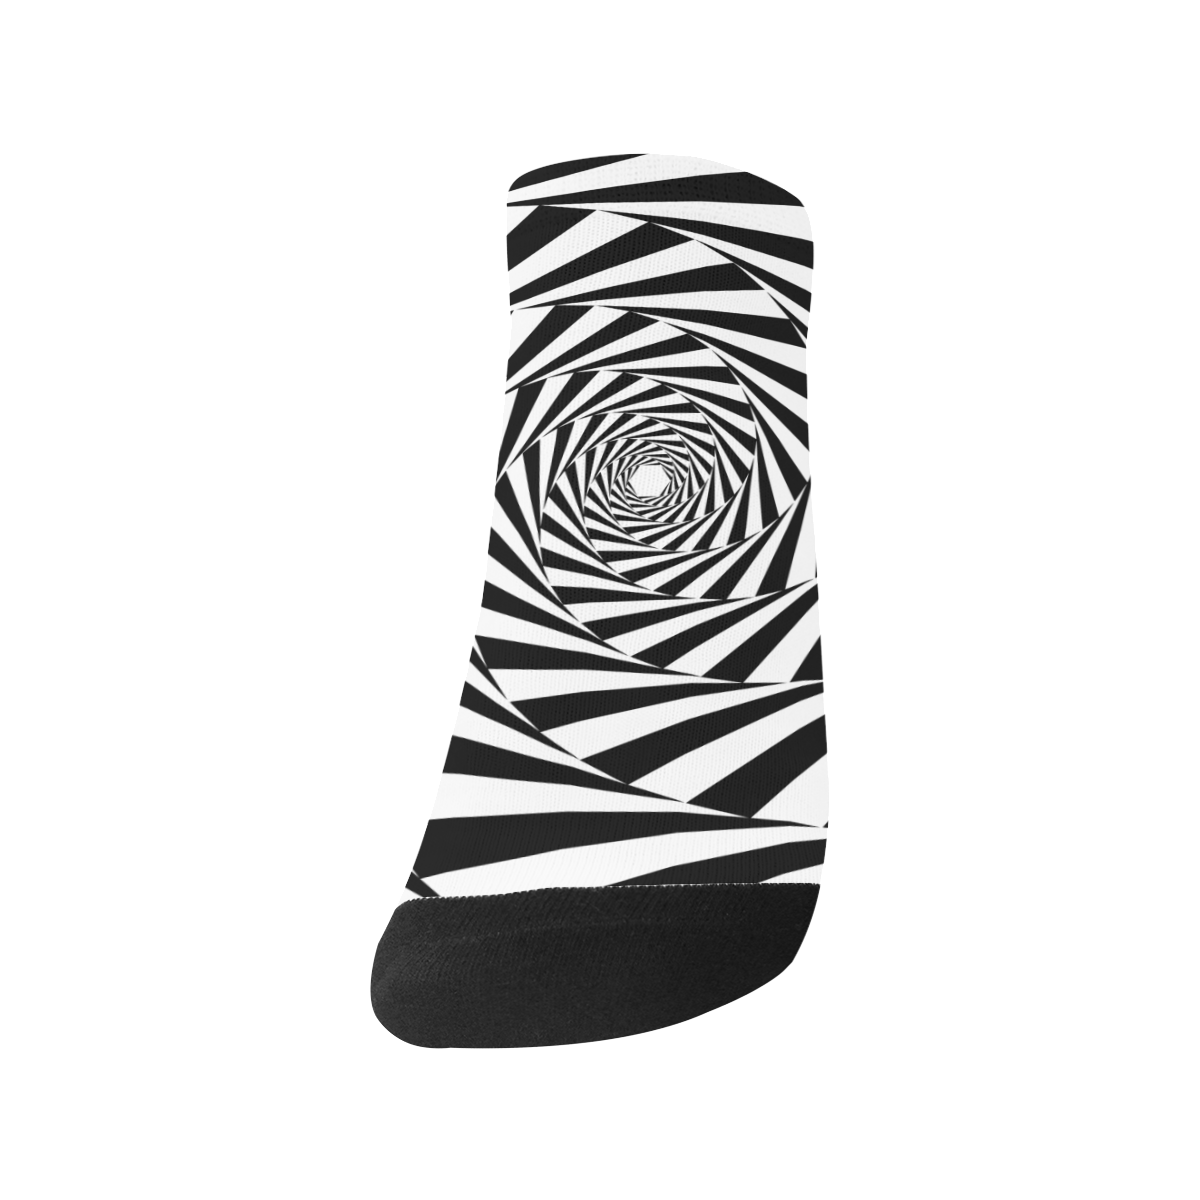 Spiral Men's Ankle Socks